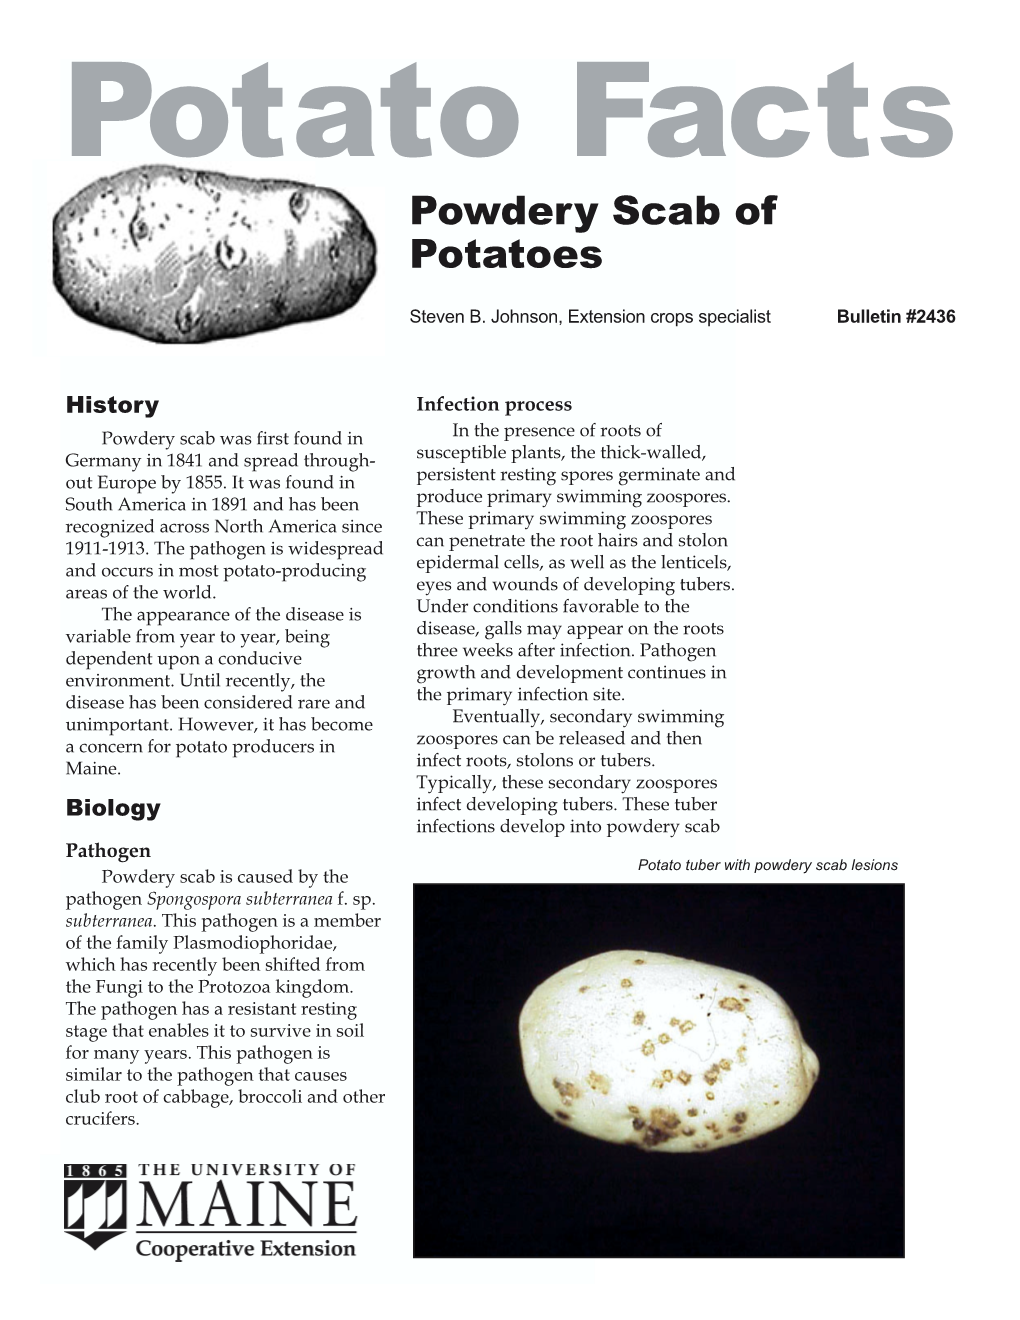 Powdery Scab of Potatoes